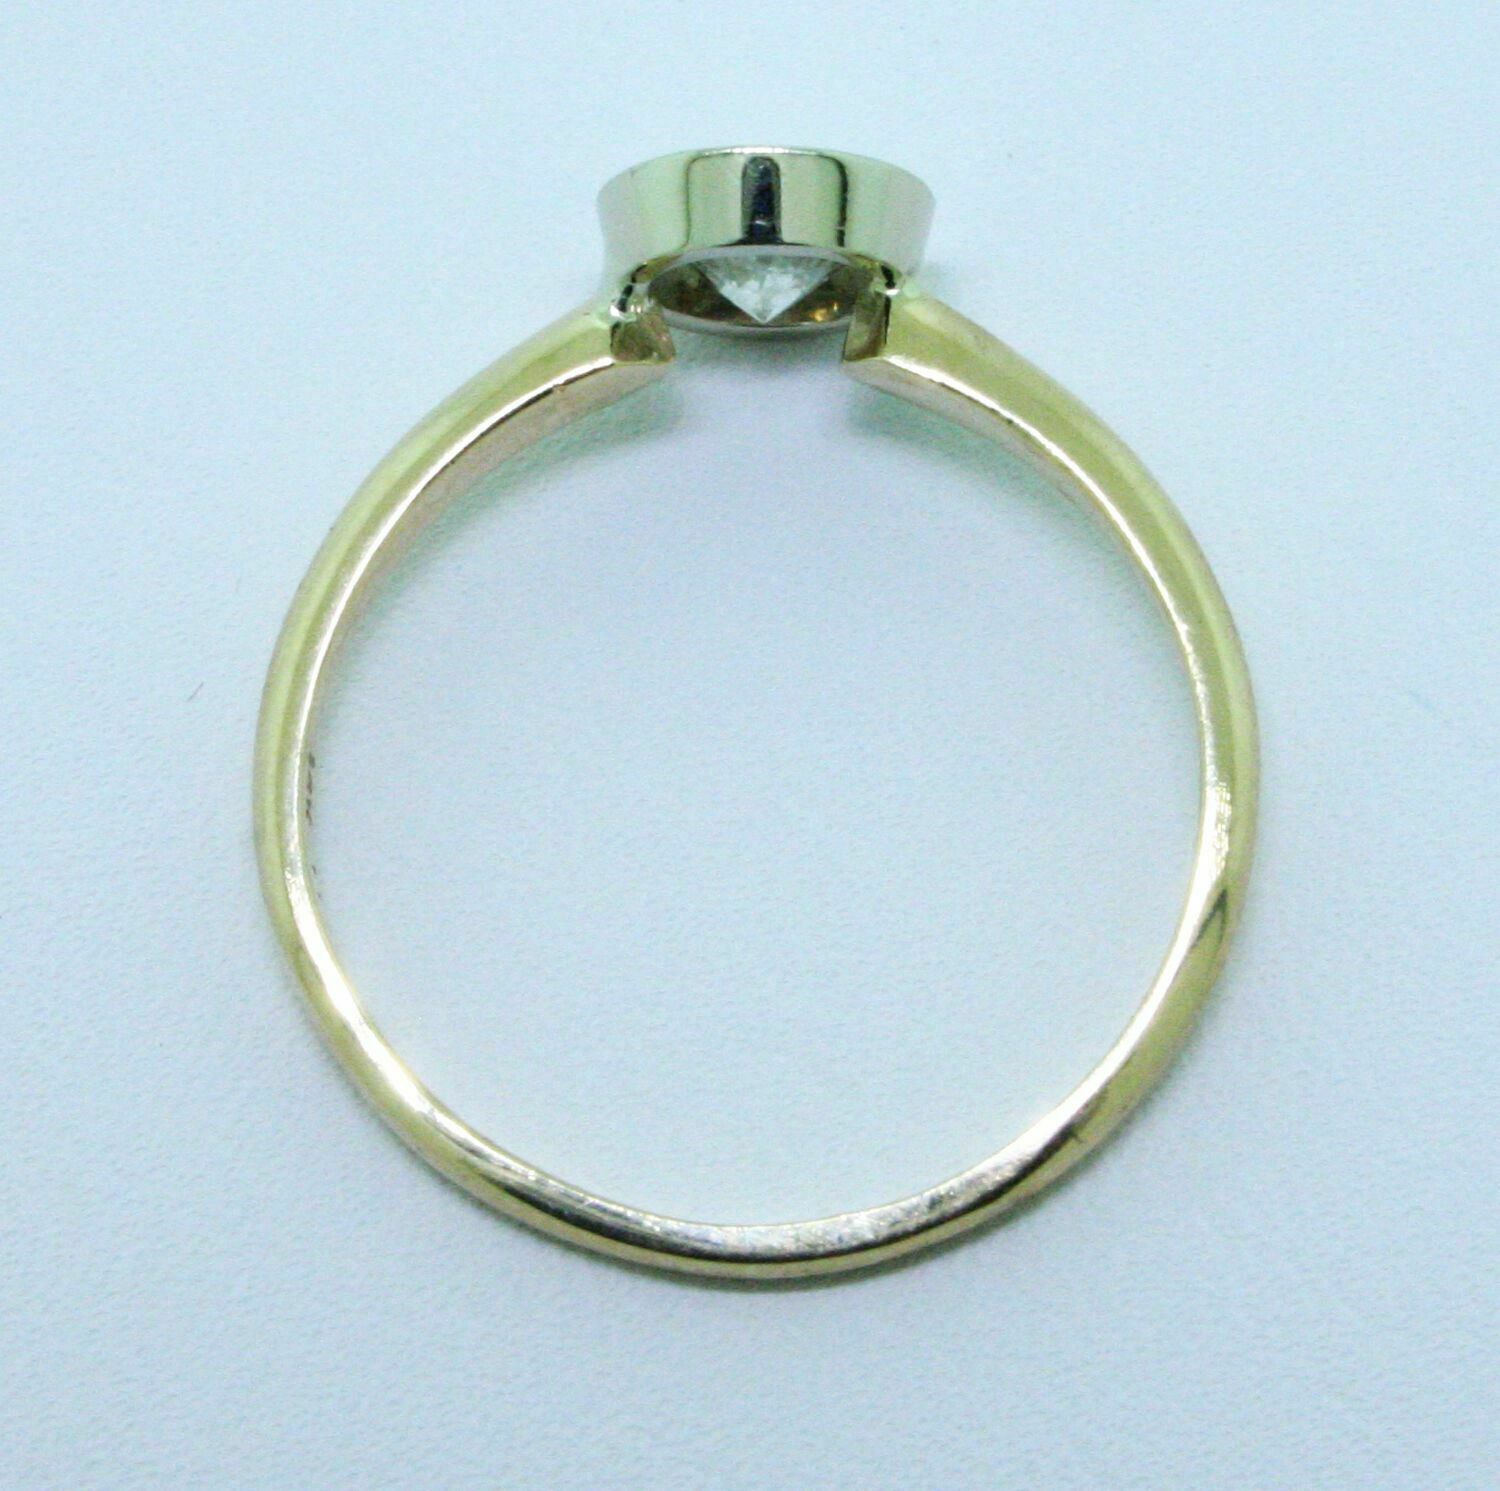 0.64 Ct Round Cut Diamond Bezel Solitaire Engagement Ring H-I I1 14k 2 Tone Gold